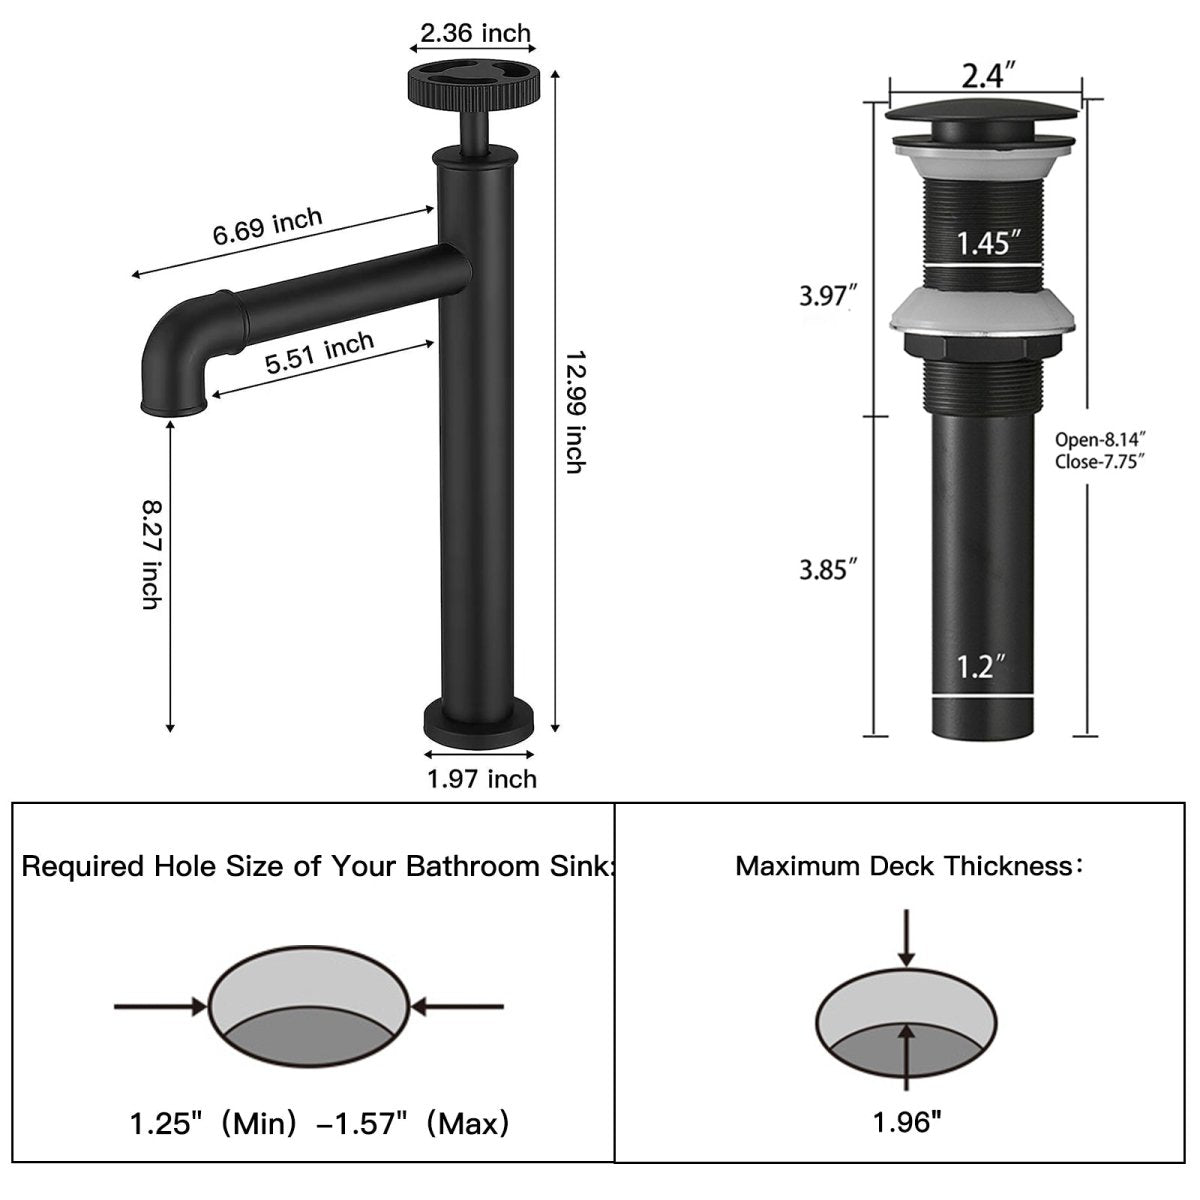 Industry Style Single Handle Vessel Sink Bathroom Faucet Black-1 - buyfaucet.com